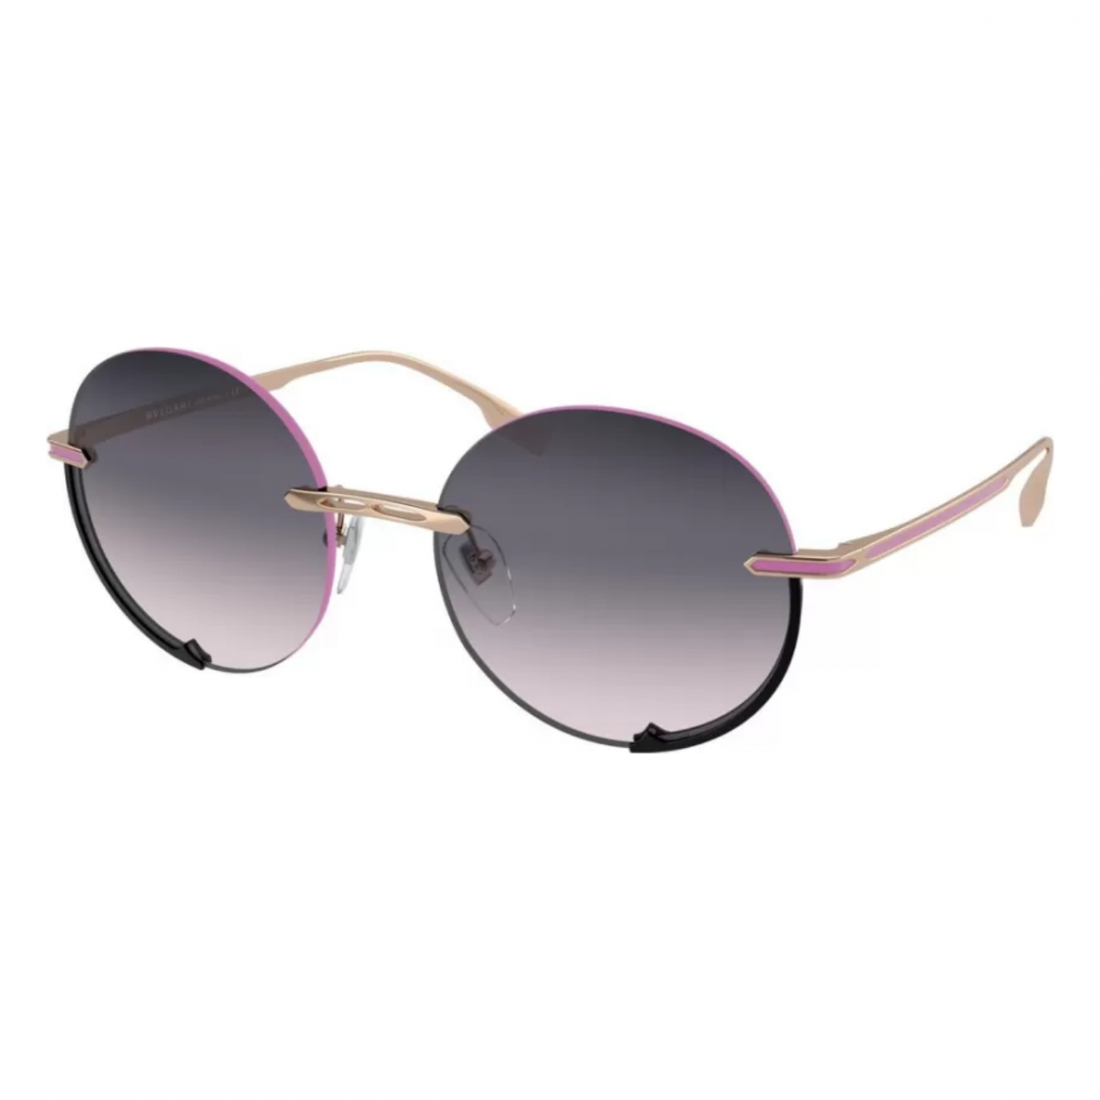 Women's '0BV6153 201458' Sunglasses